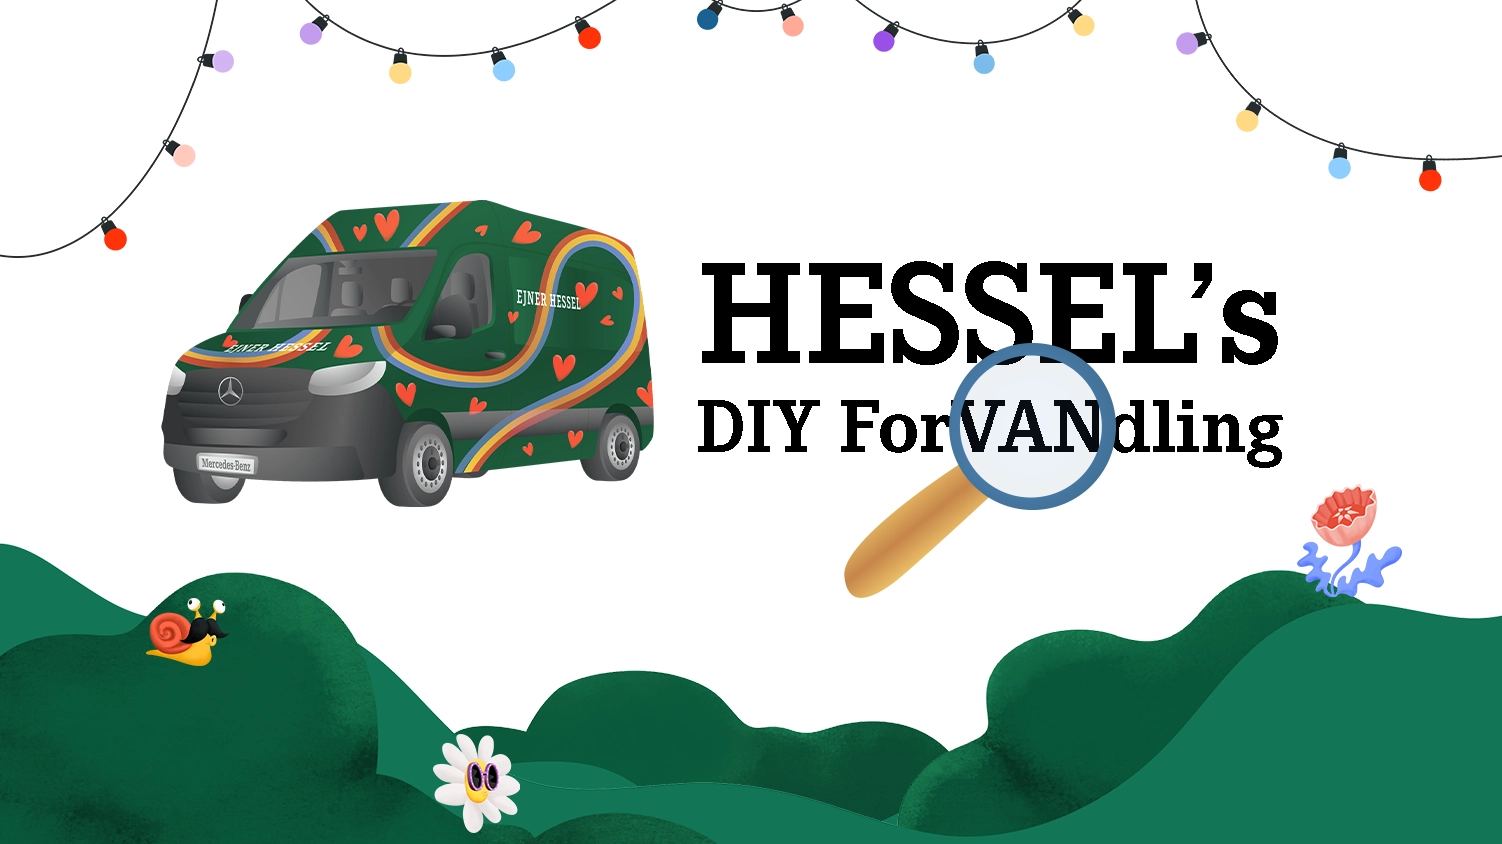 Hessel's DIY forVANdling